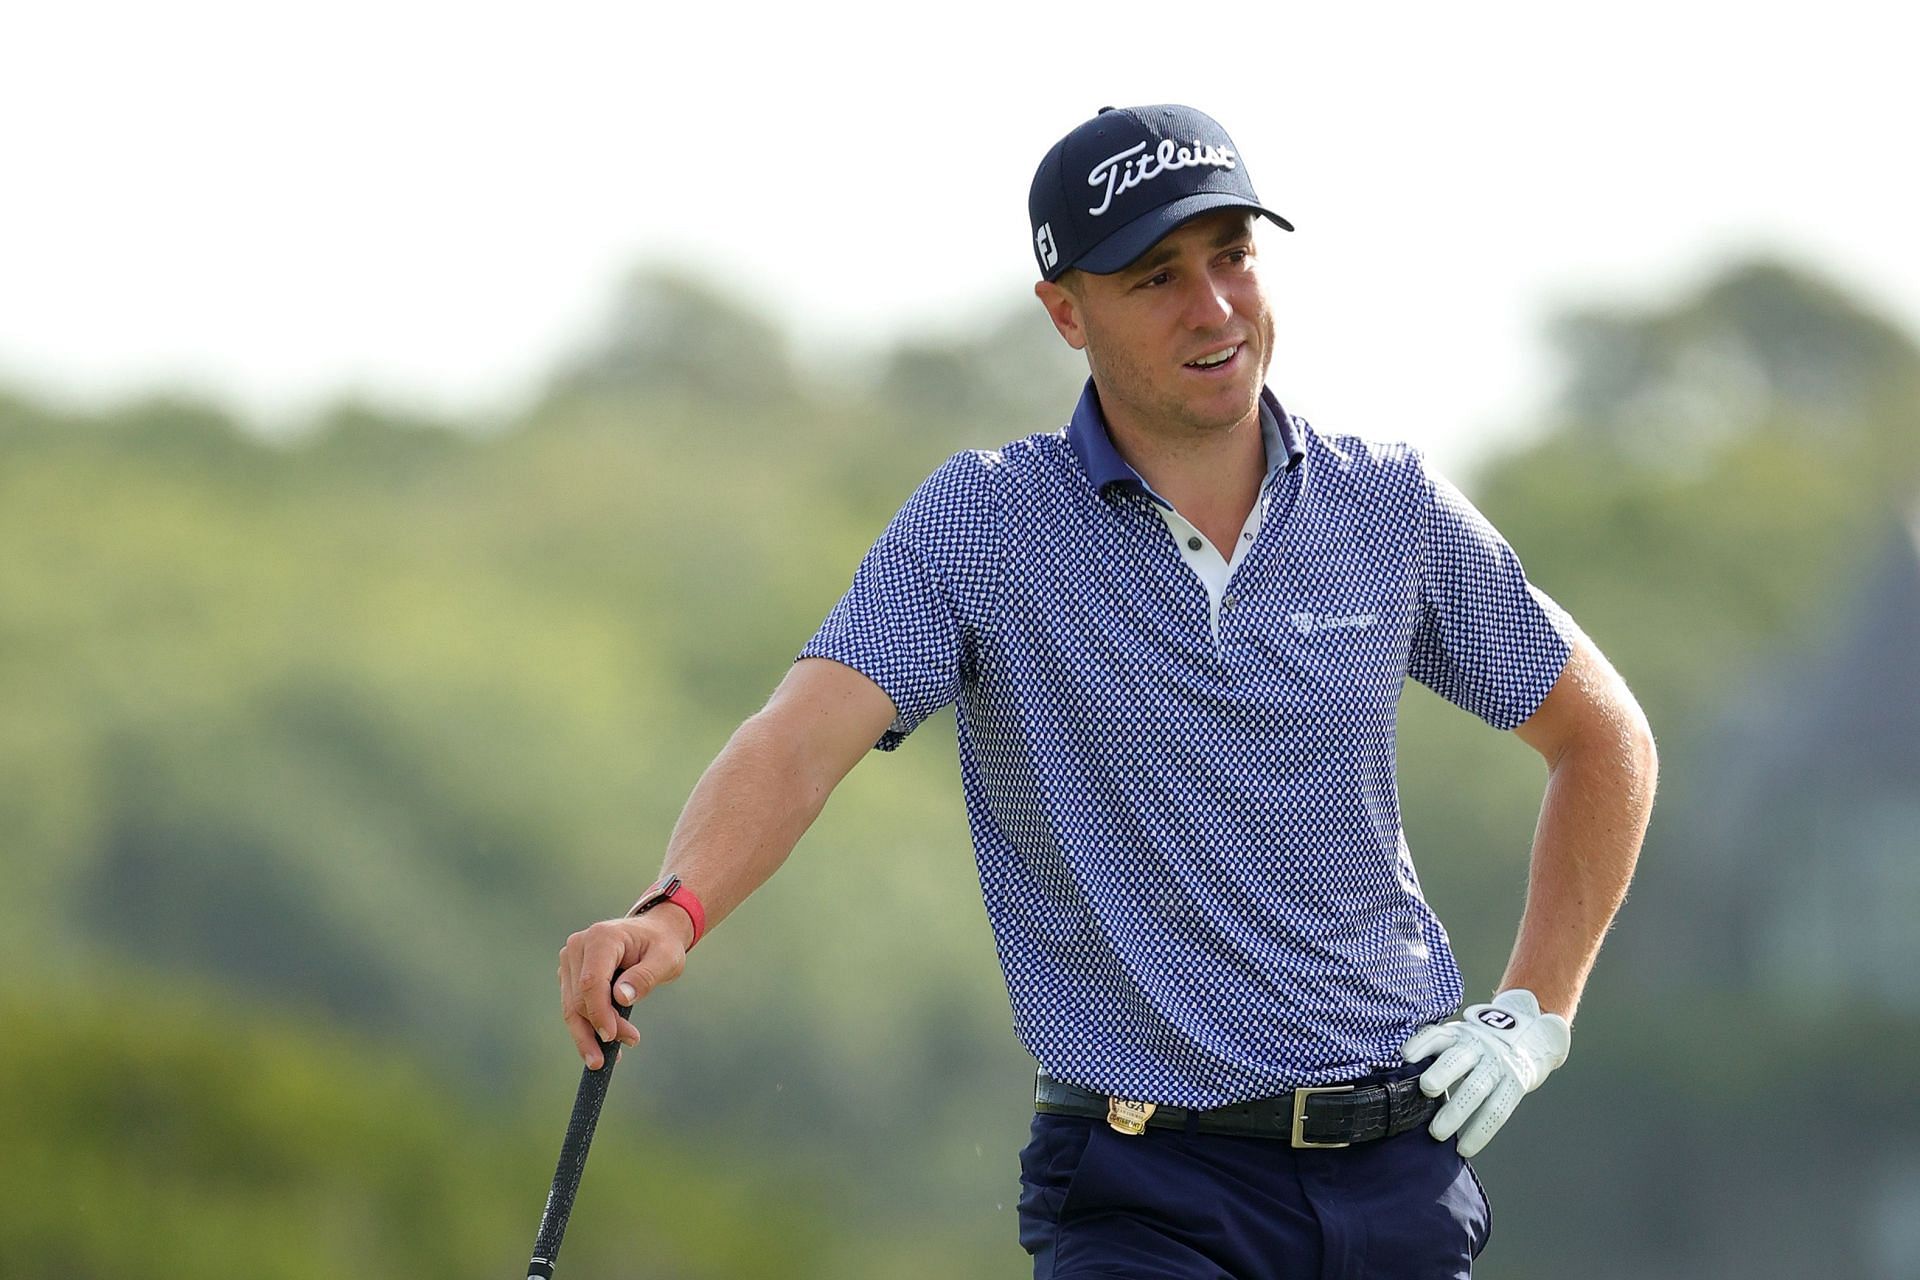 Justin Thomas LIV Golf rumors quashed as golfer joins new golf league